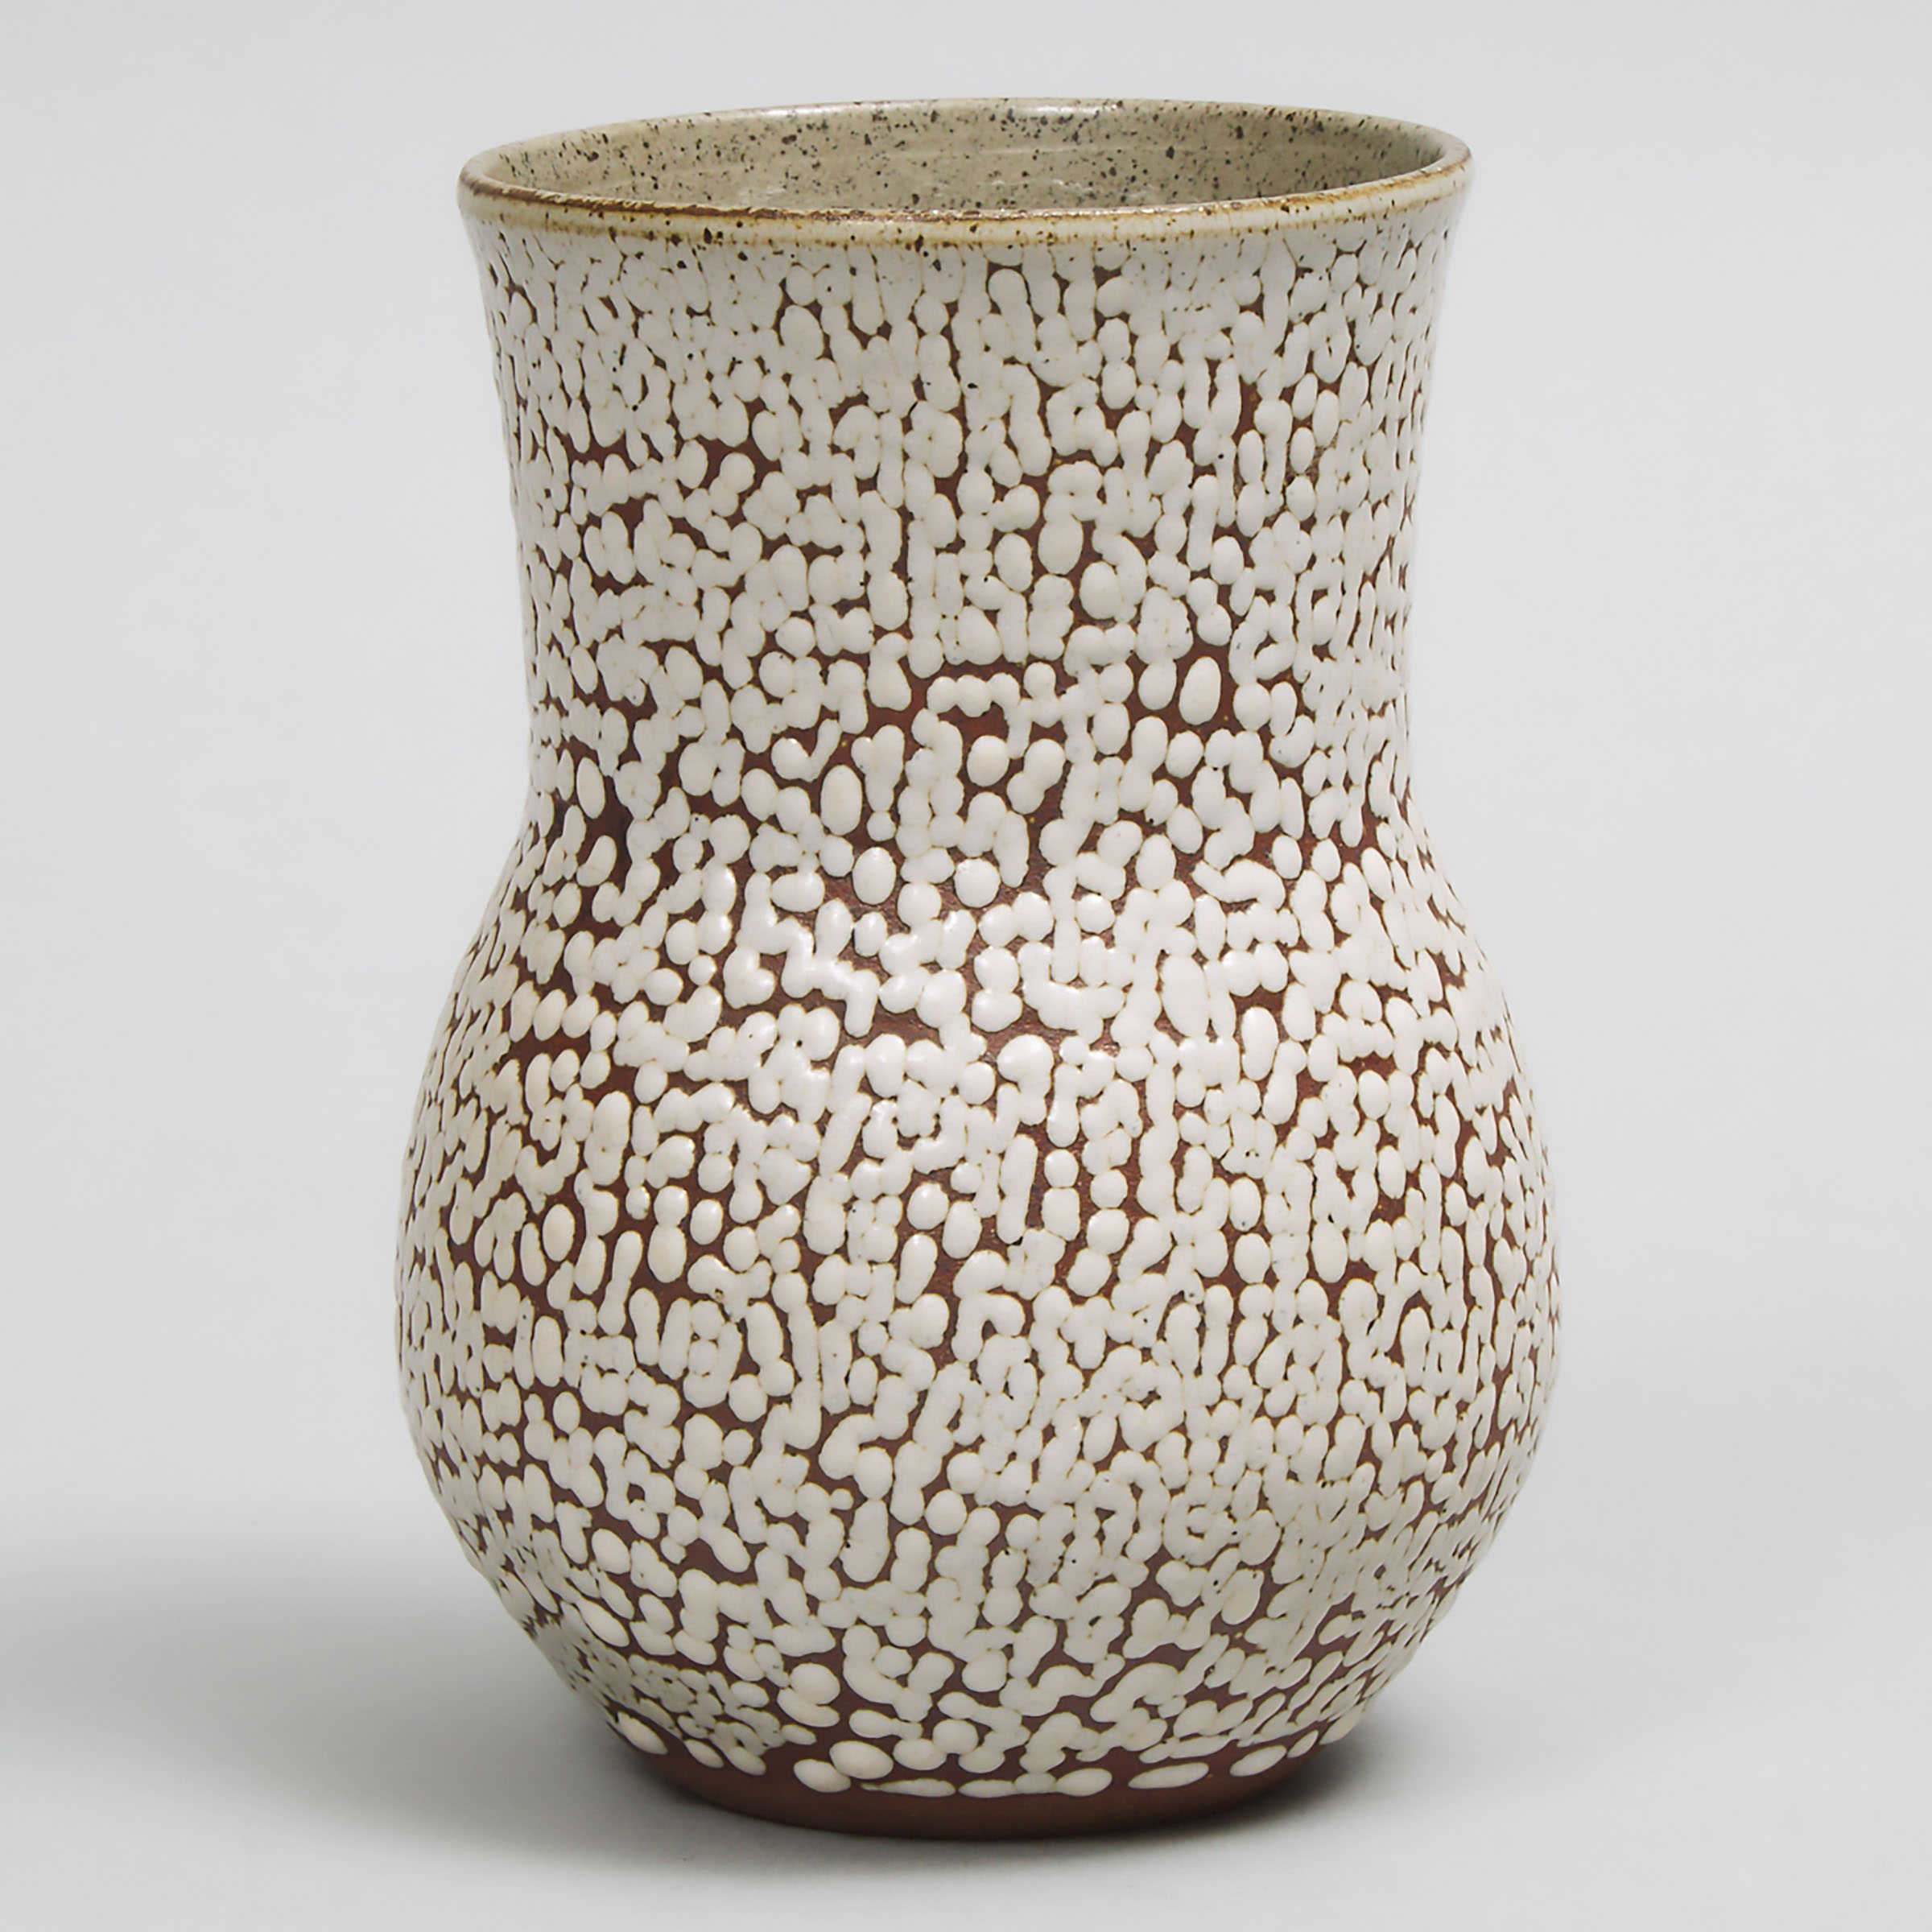 Deichmann Cream Pebble Glazed Stoneware Vase, Kjeld & Erica Deichmann, c.1950